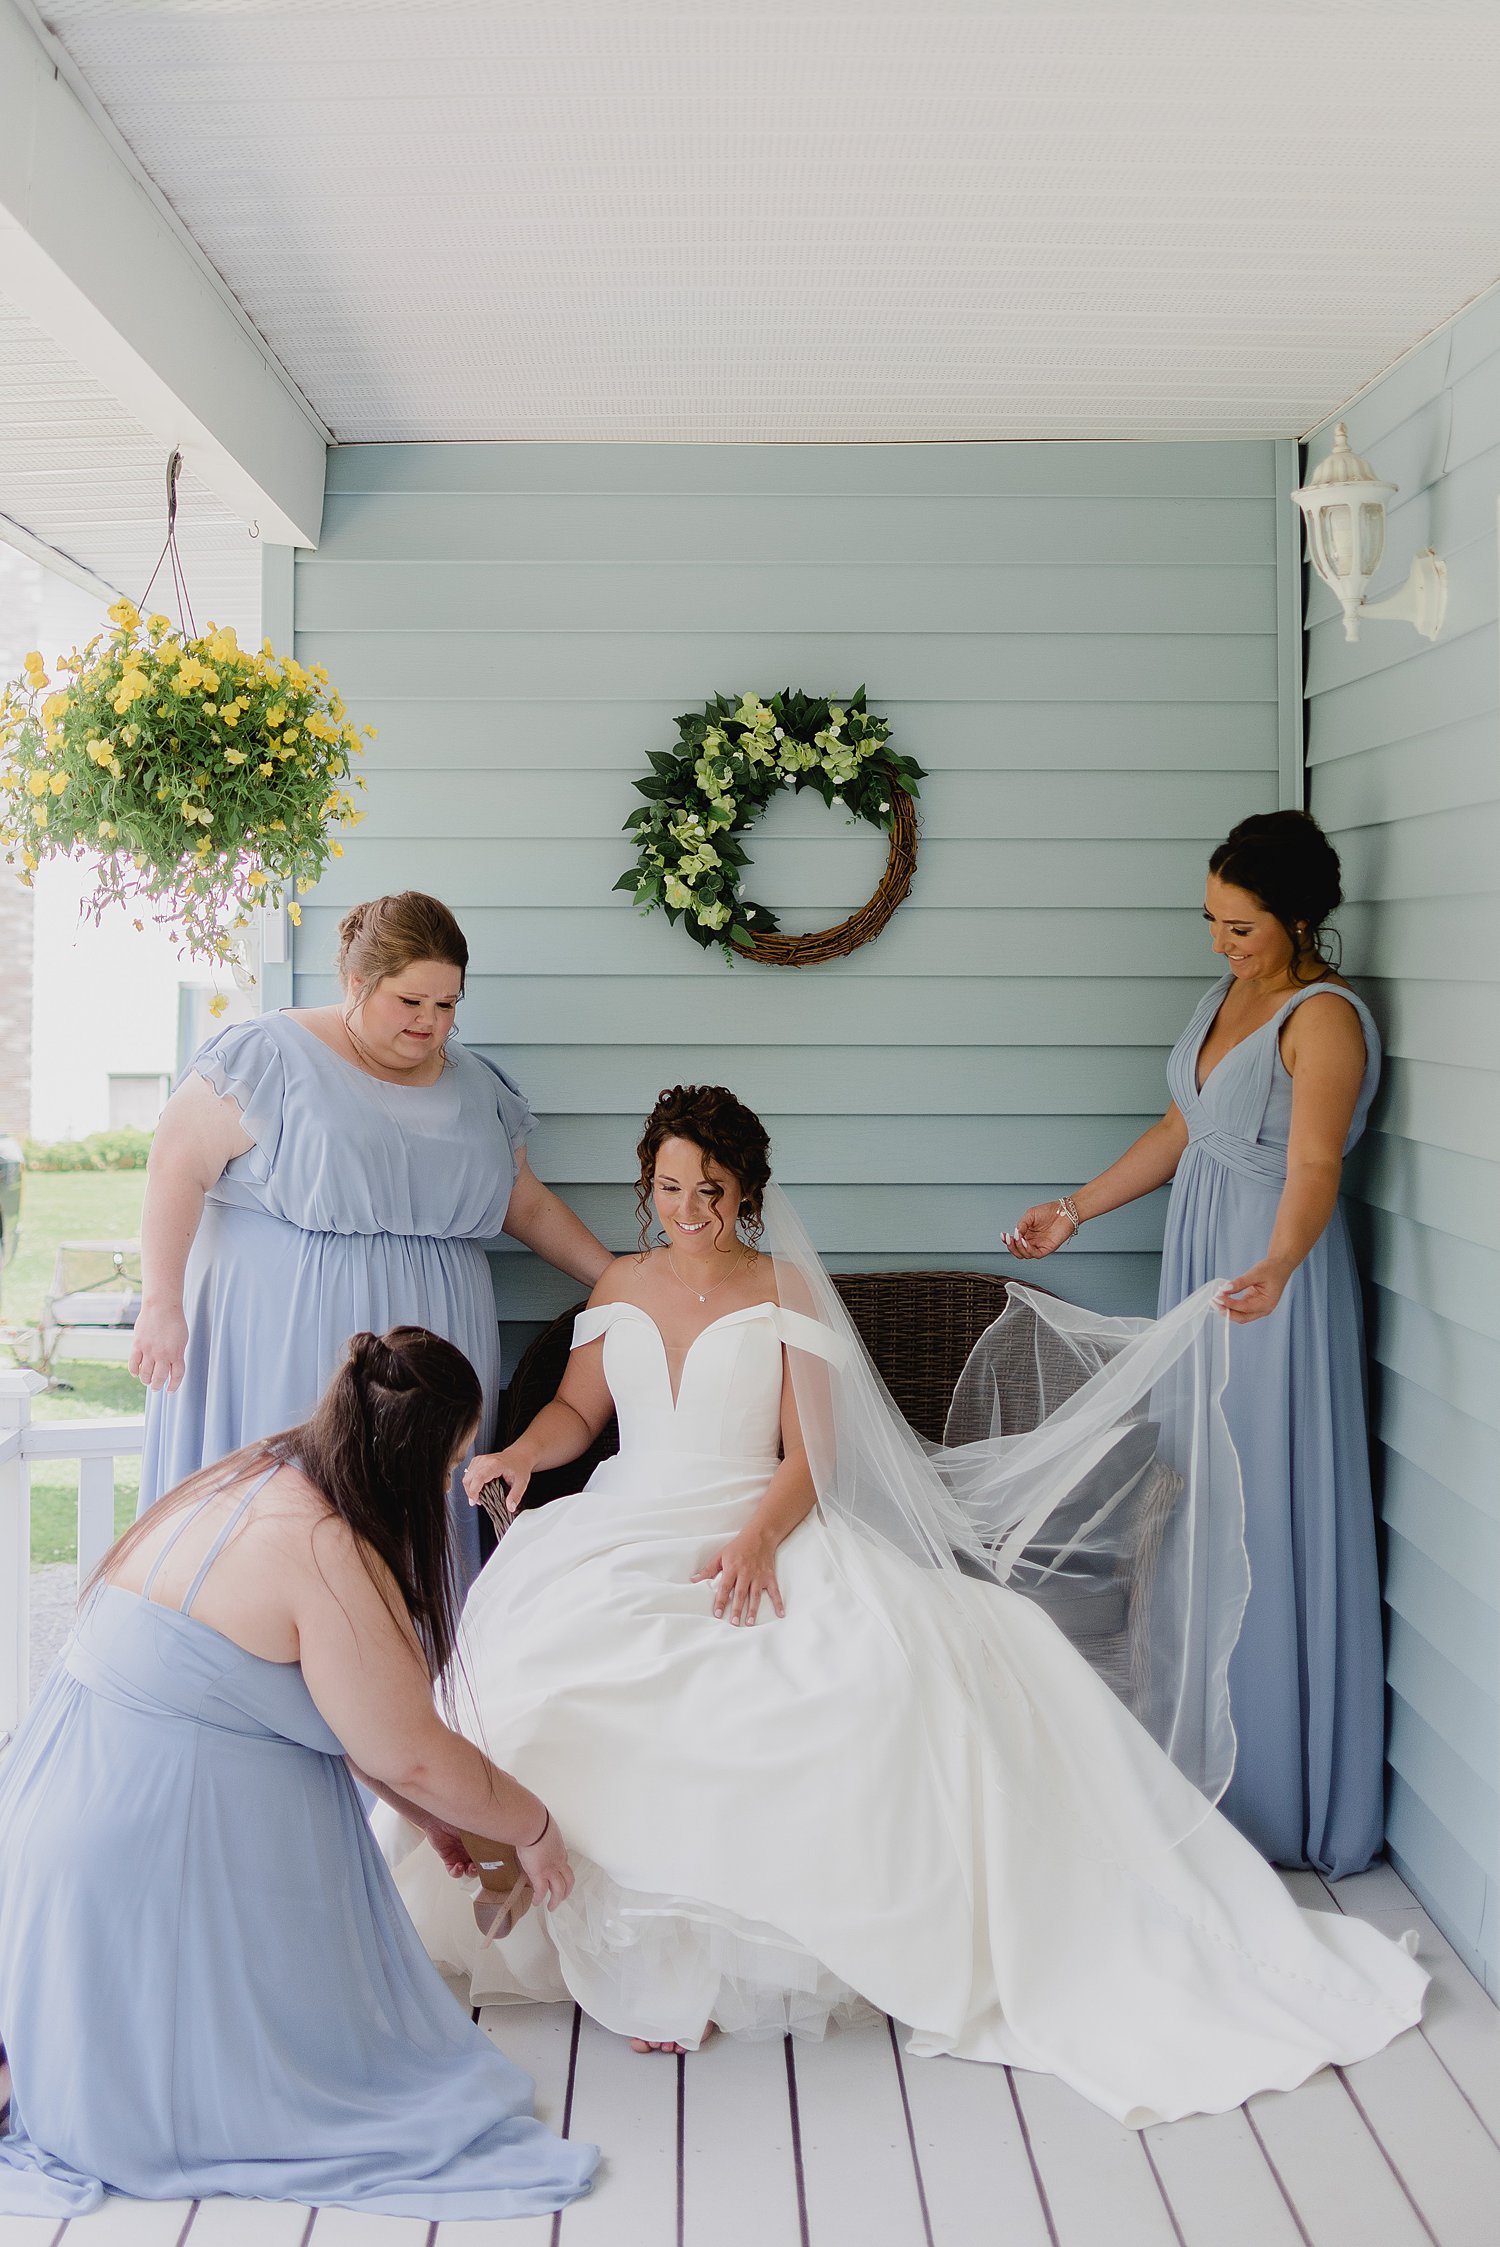 Elegant Summer Backyard Tented Wedding in Sydenham, Ontario | Prince Edward County Wedding Photographer | Holly McMurter Photographs_0007.jpg